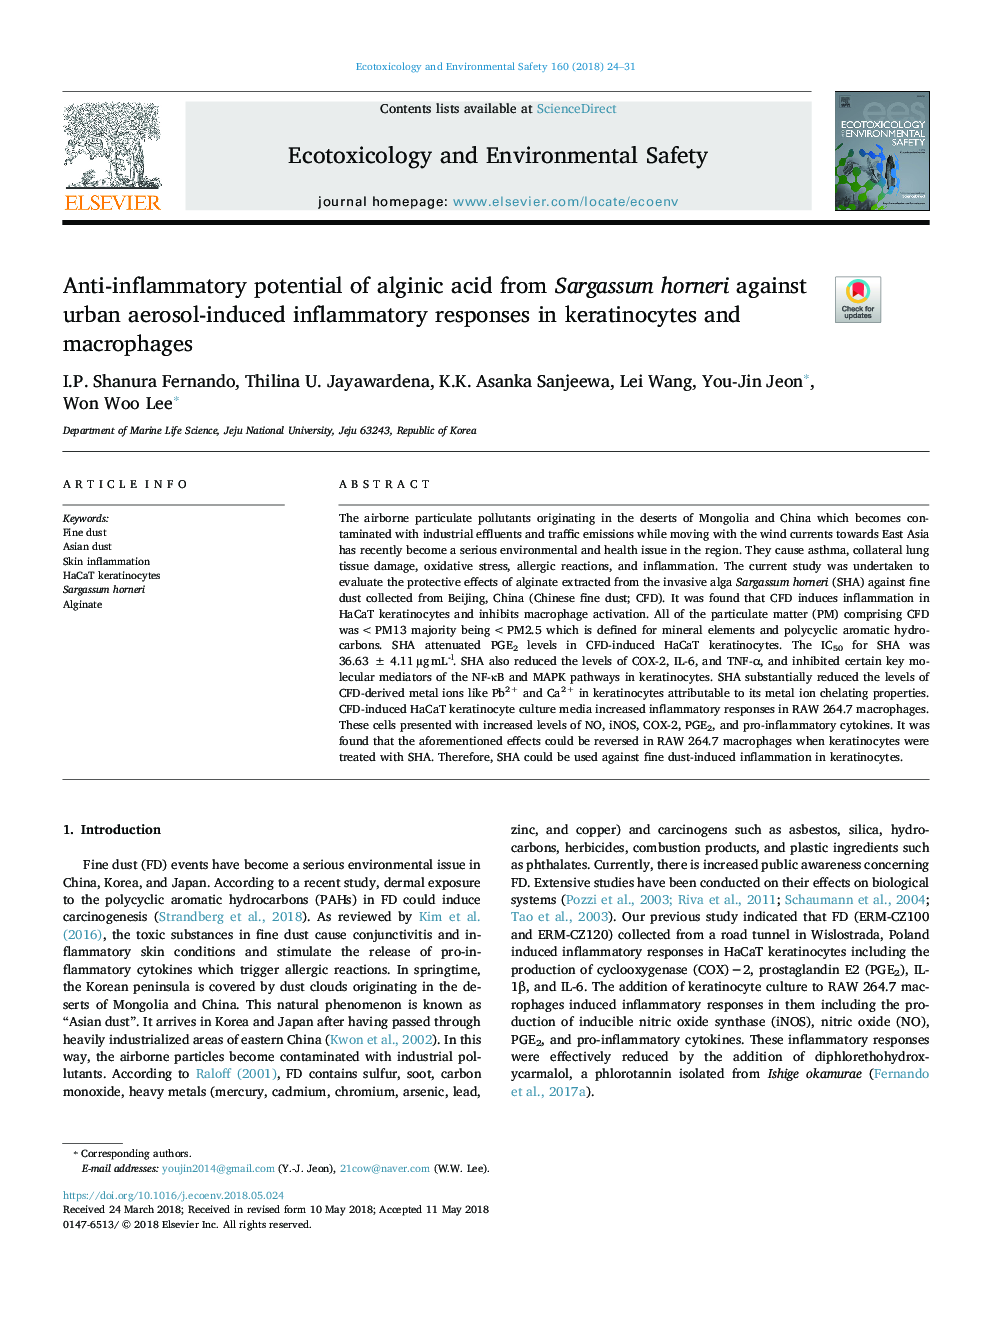 Anti-inflammatory potential of alginic acid from Sargassum horneri against urban aerosol-induced inflammatory responses in keratinocytes and macrophages